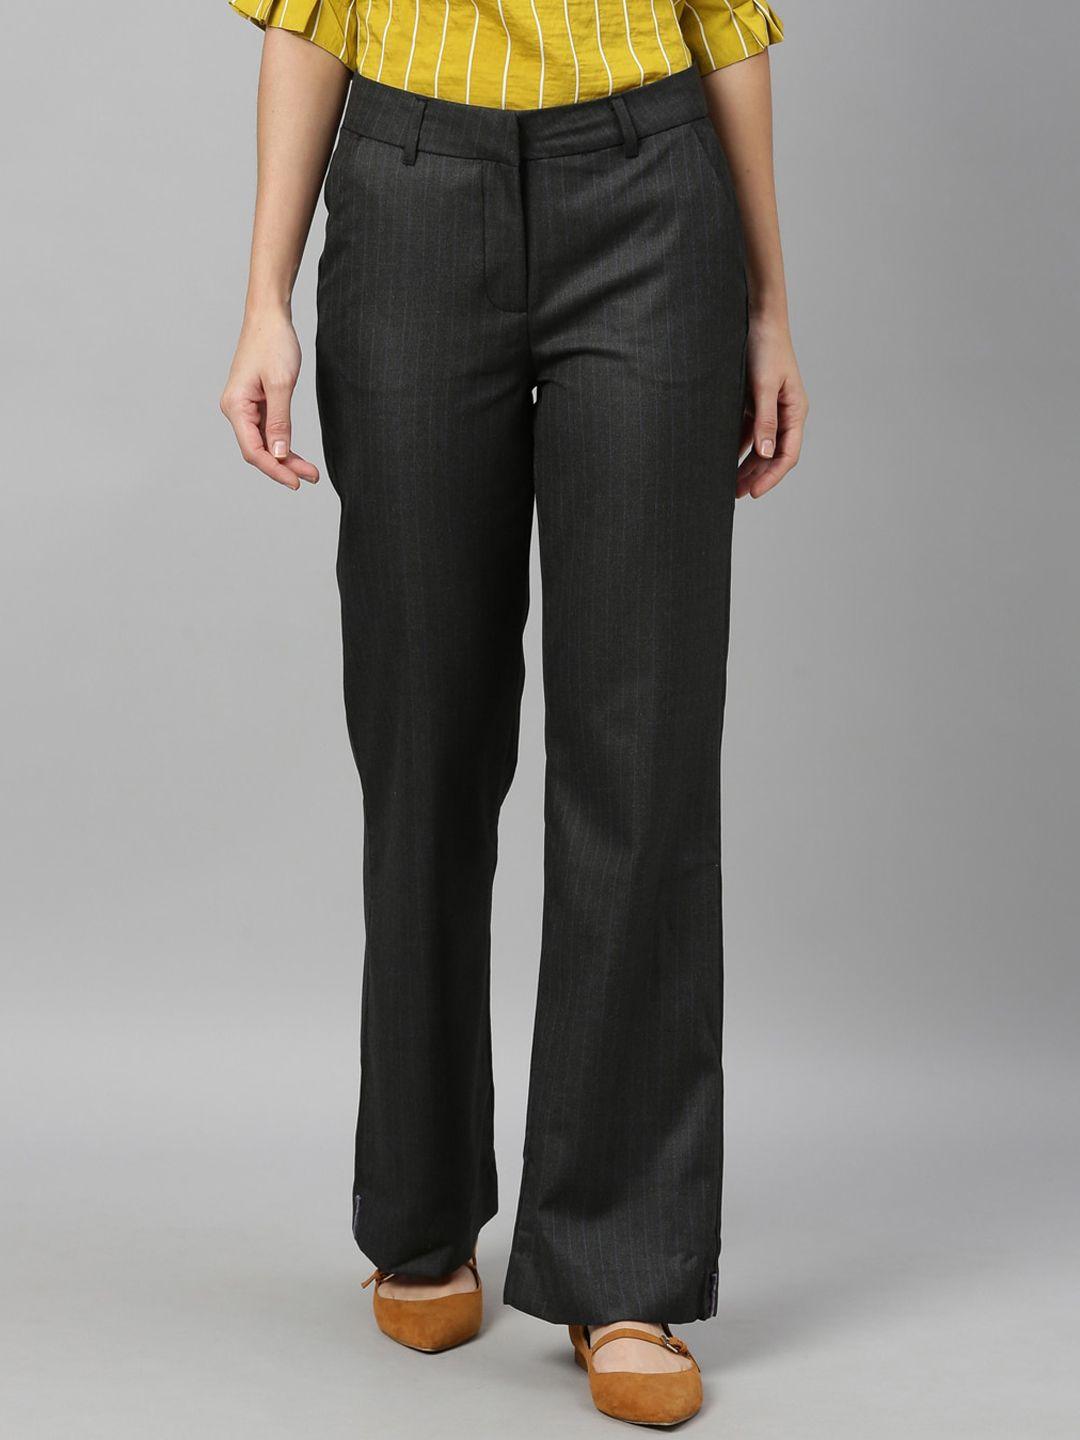 rareism-women-charcoal-slim-fit-bootcut-trousers